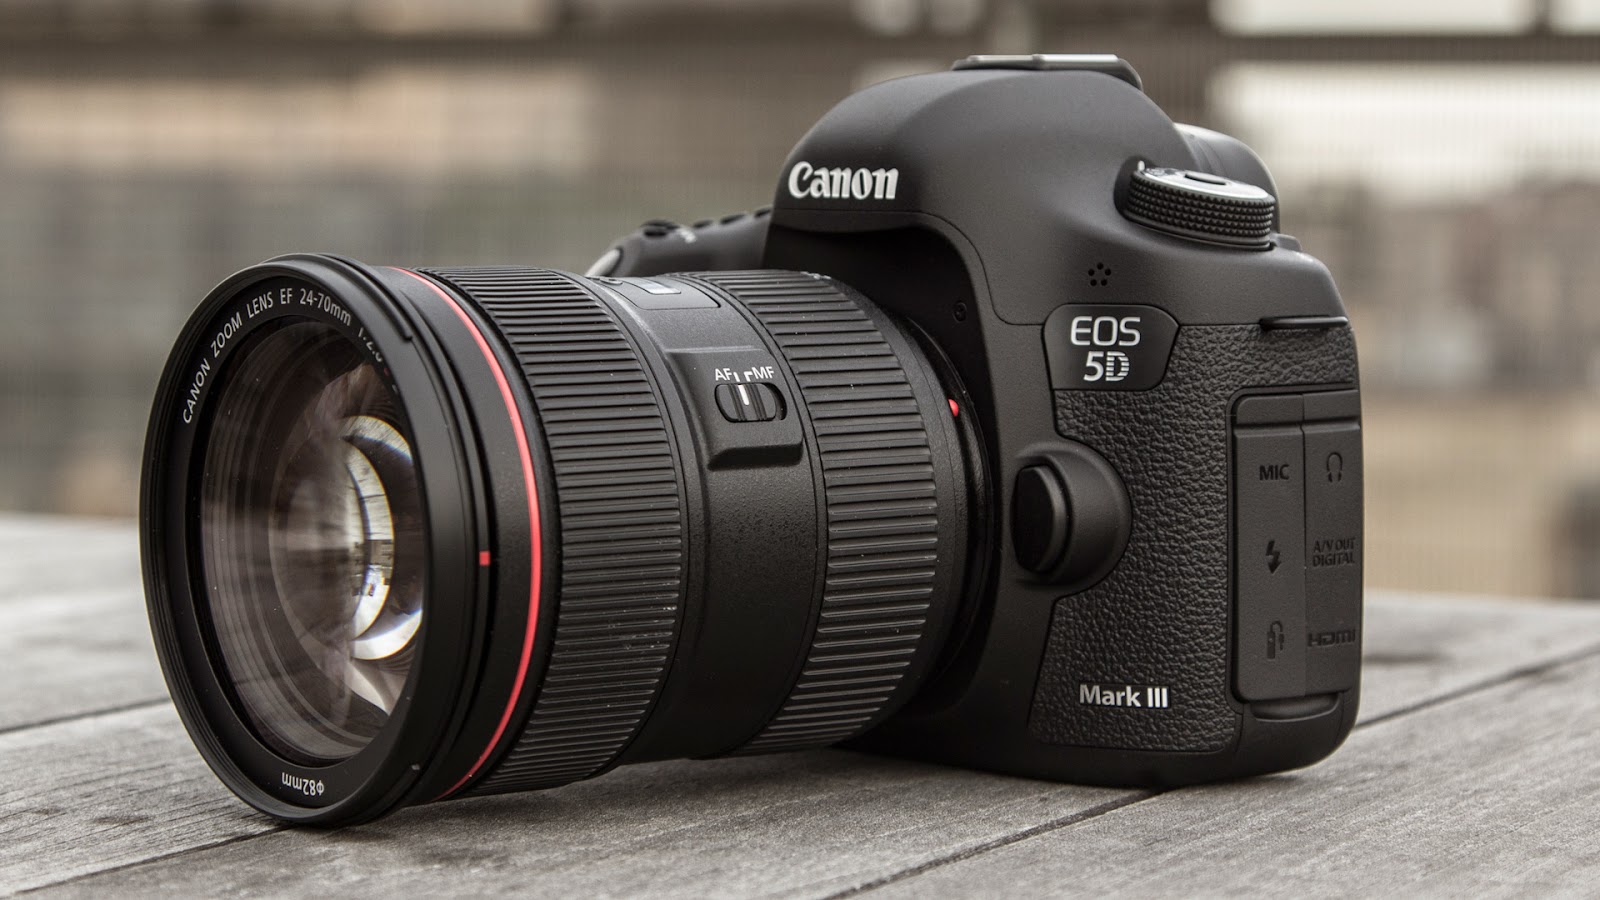  Canon  5D  Mark  III  Appareil Photo  Num rique Compact